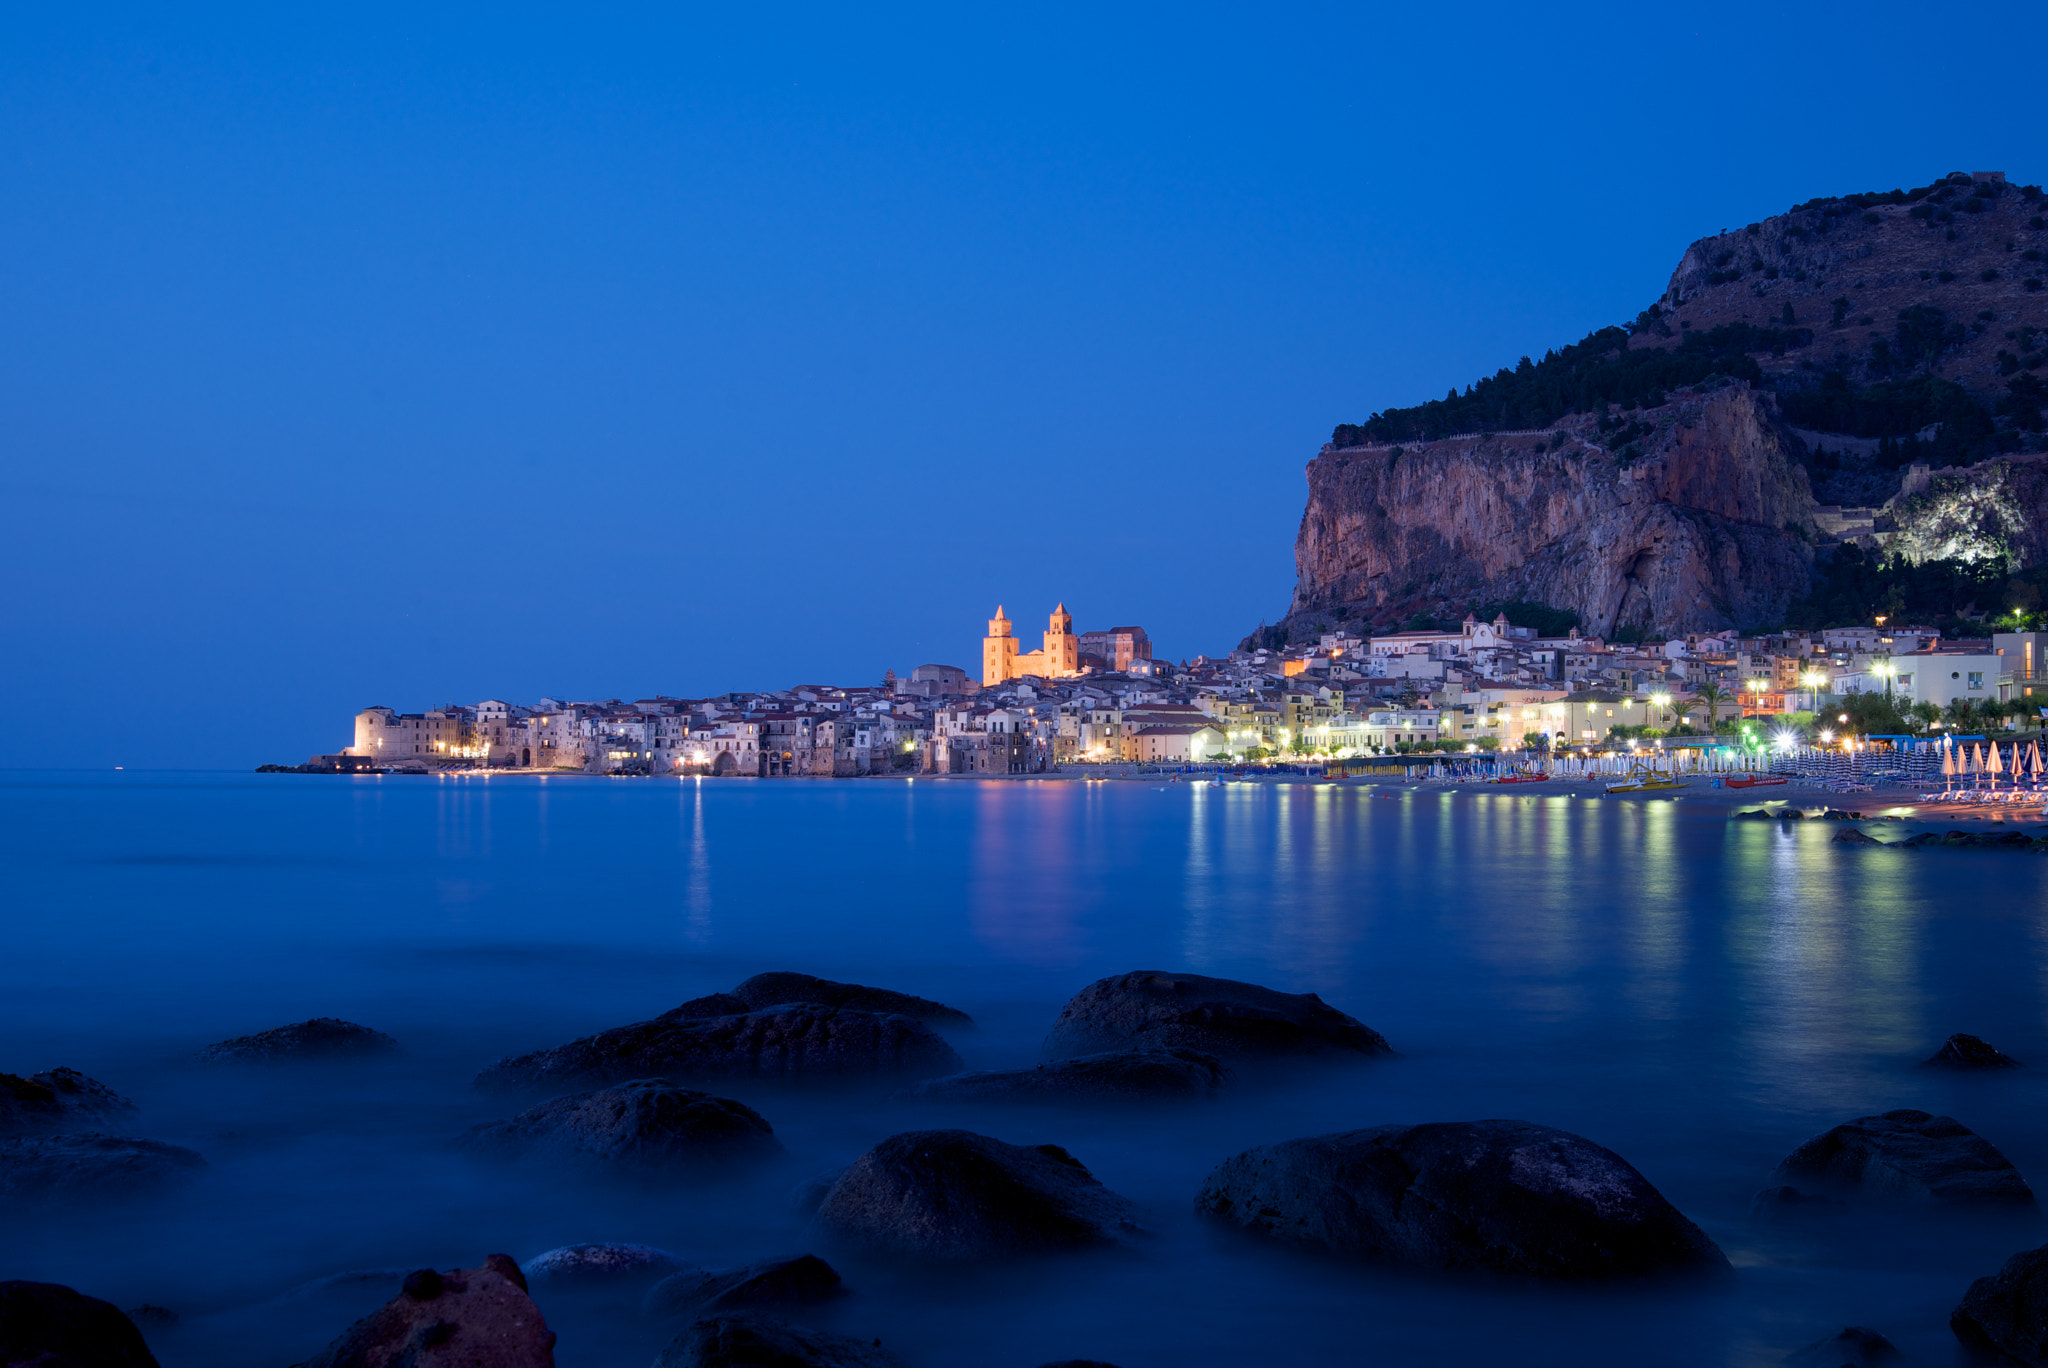 Cefalù, Sicily at night